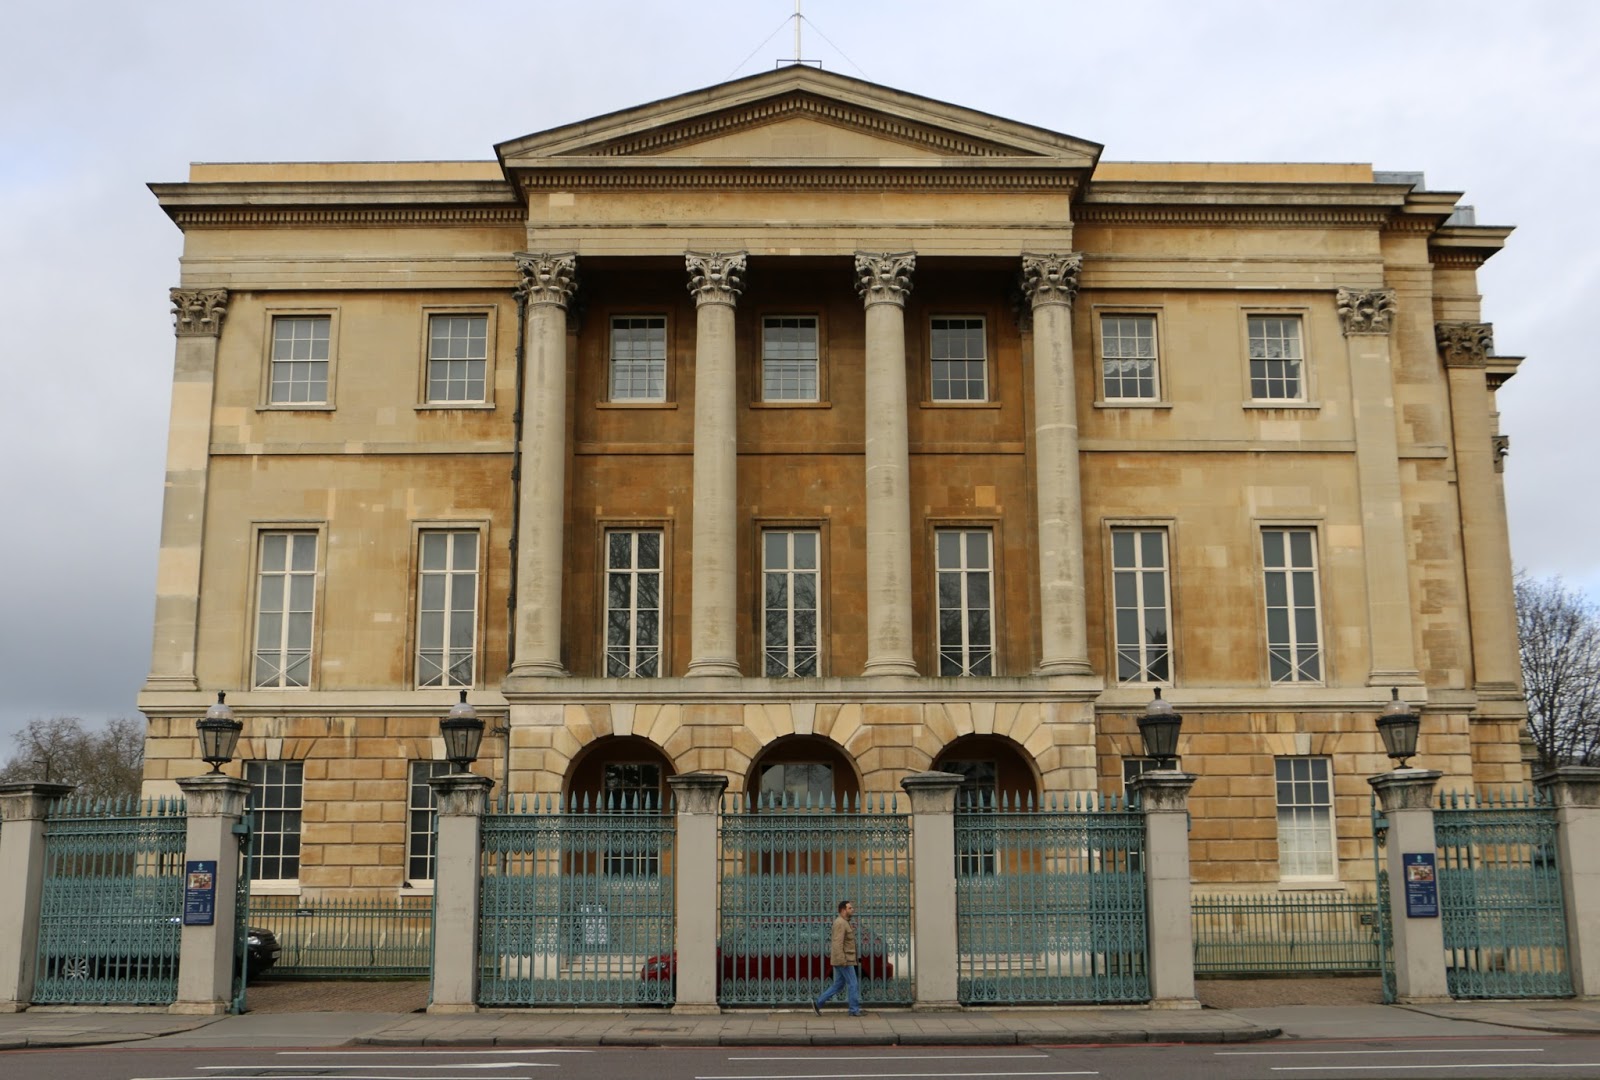 Apseley House (No. 1 London) – The Wellington Museum